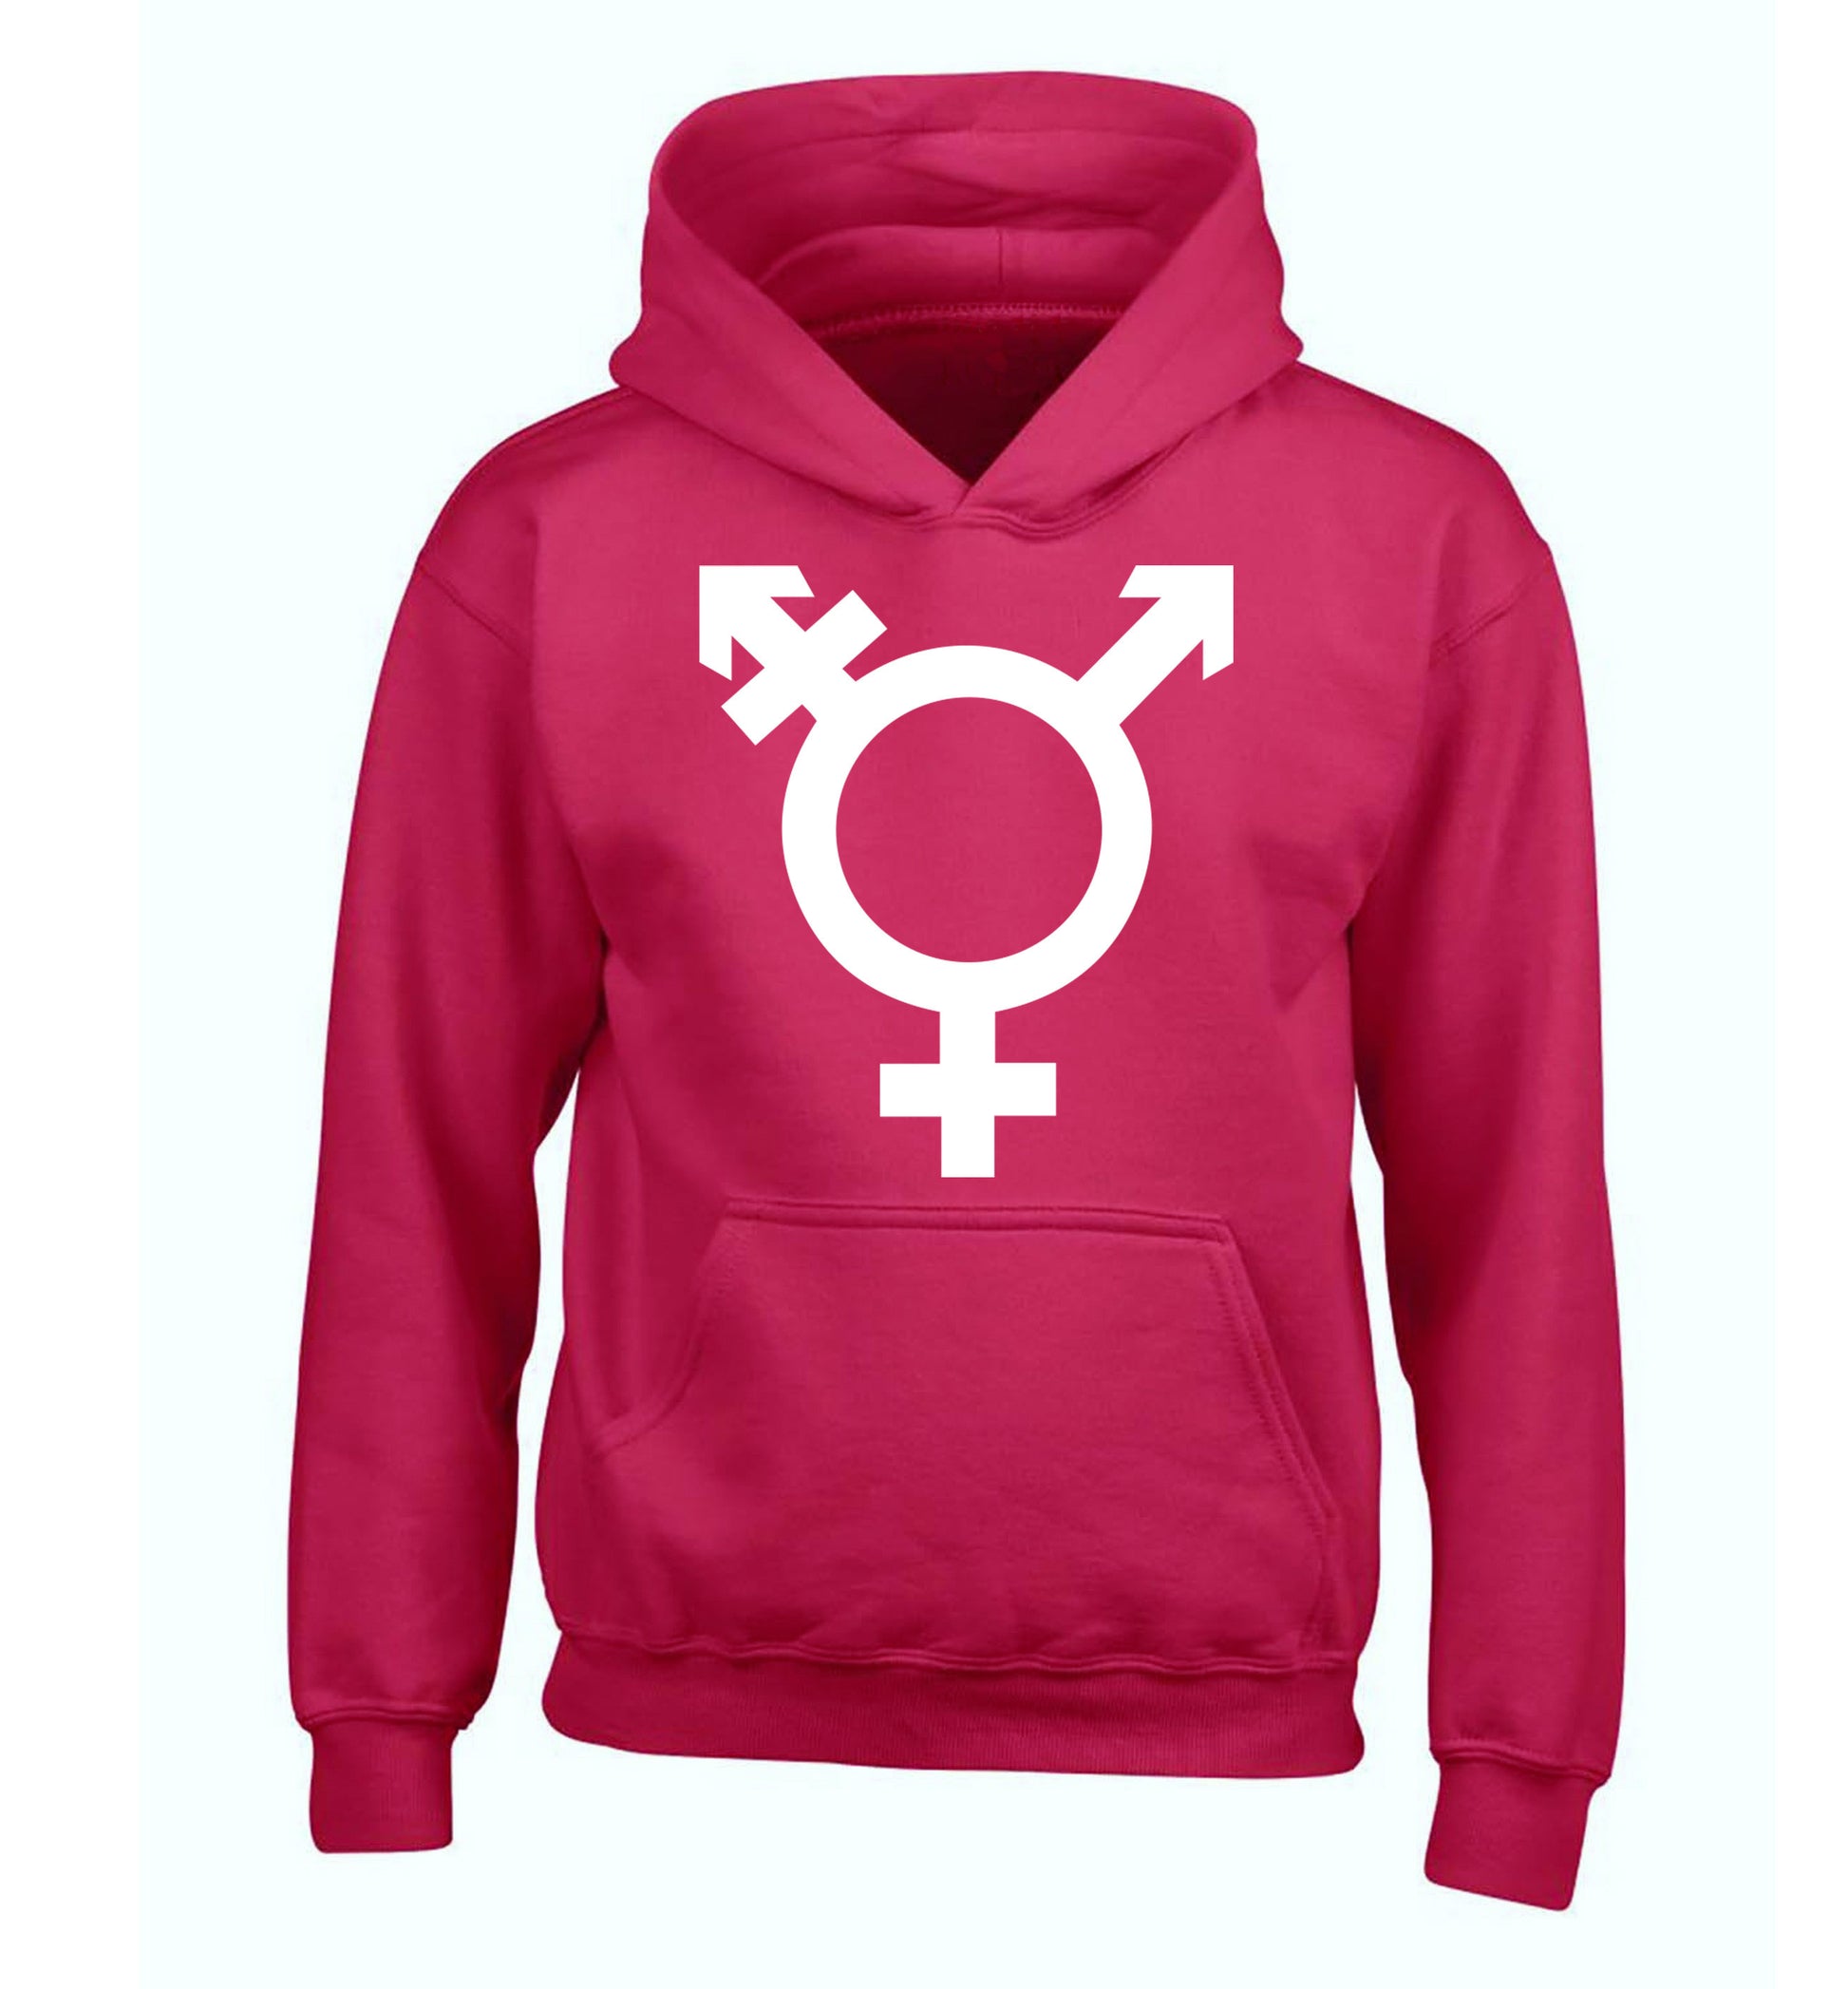 Gender neutral symbol large children's pink hoodie 12-14 Years